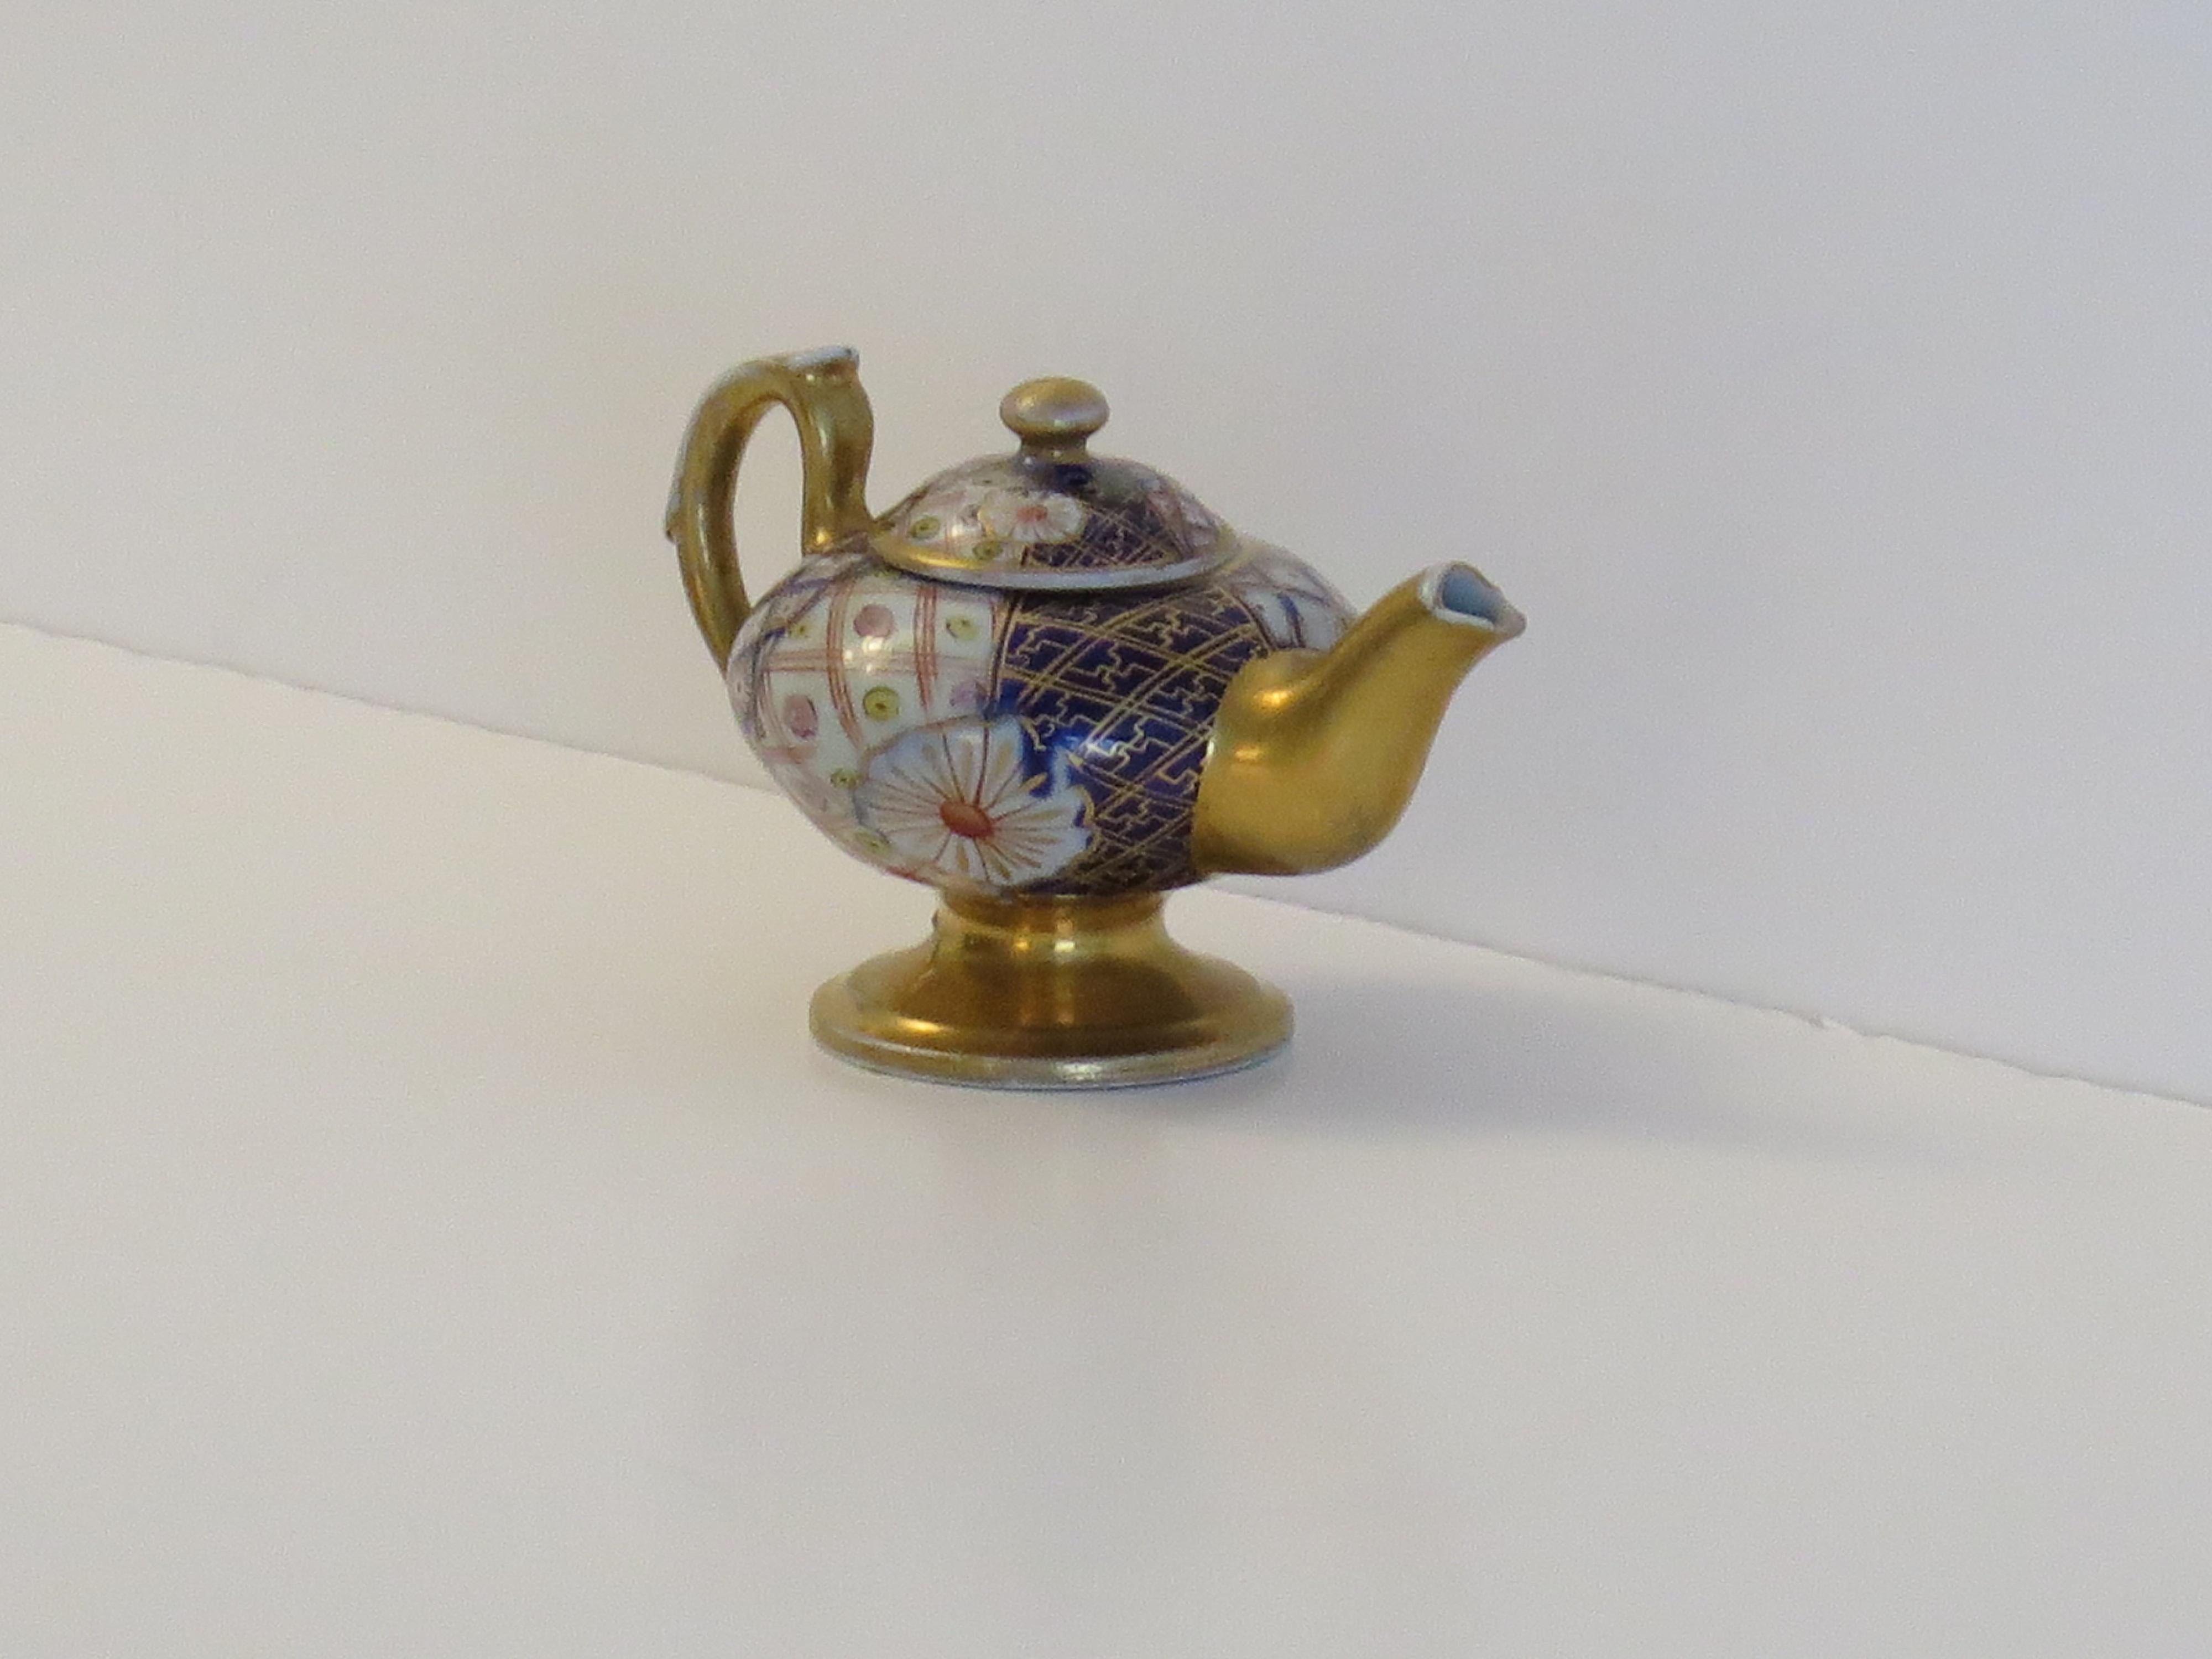 Rare Mason's Ironstone Miniature Teapot in Plaid Japan rare Pattern, circa 1820 For Sale 4